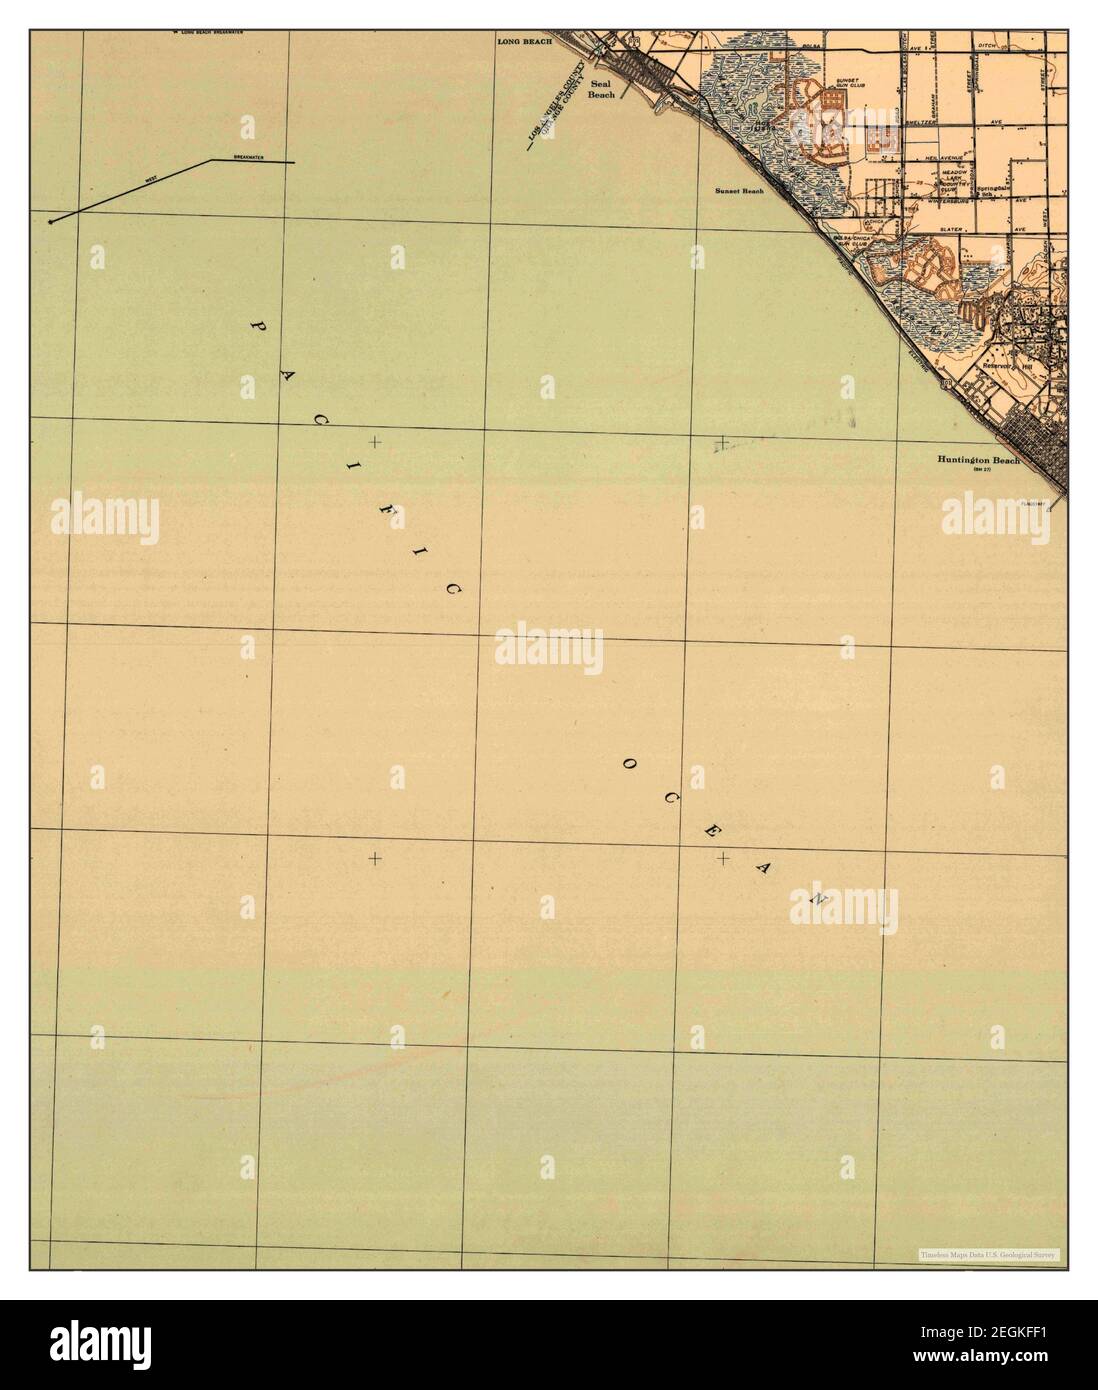 Las Bolsas, California, map 1943, 1:62500, United States of America by Timeless Maps, data U.S. Geological Survey Stock Photo